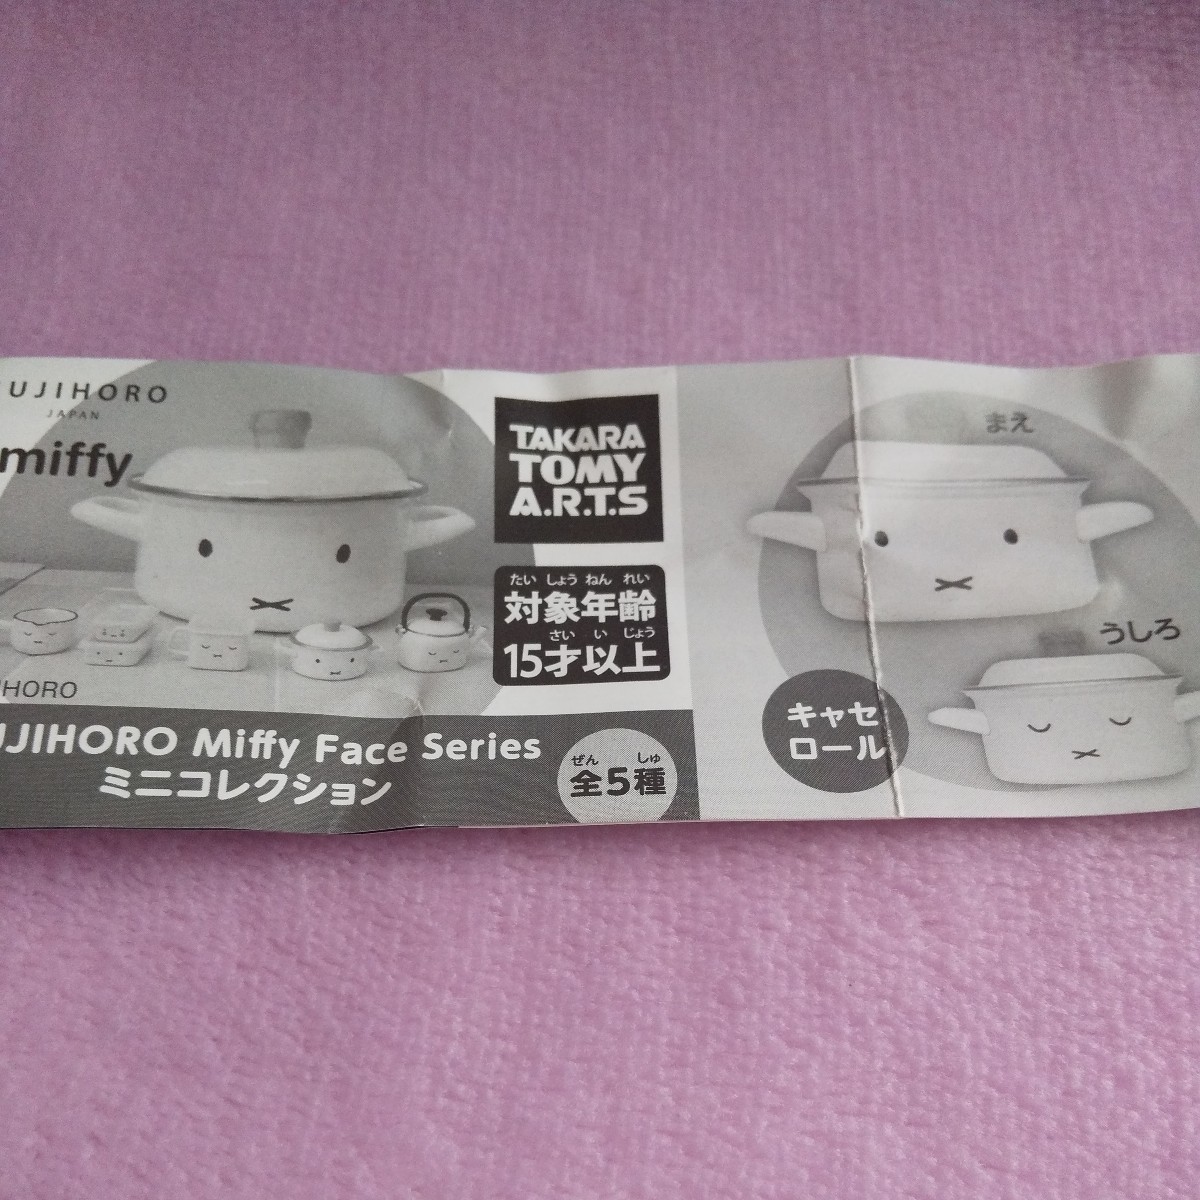 ... ...  дополнение    мульти  мешочек    *    штамп  ... кейс  & FUJIHORO Miffy Face Series  mini  коллекция  ...  Фудзи ...  3 шт  комплект   